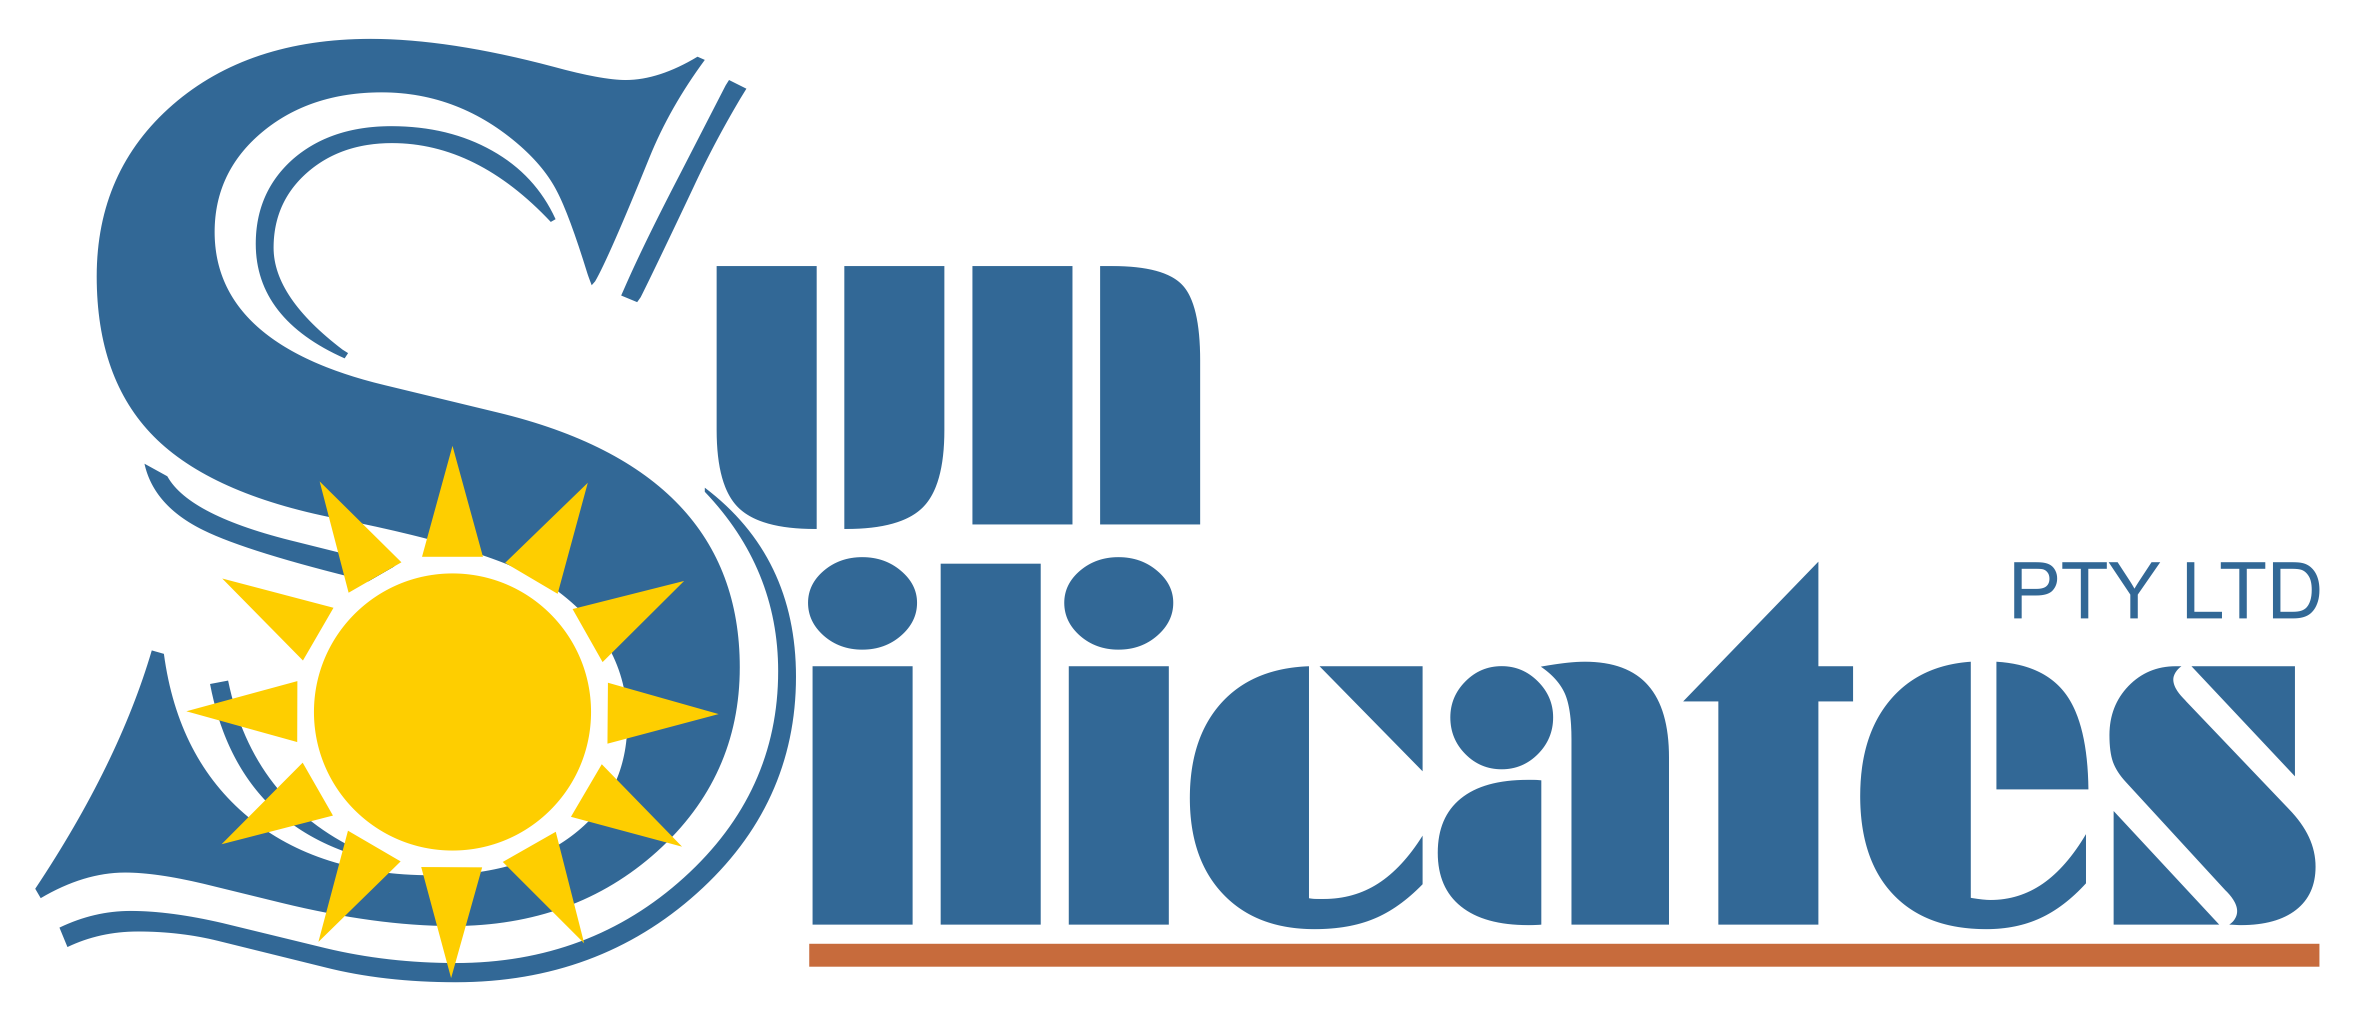 sunsilicates logo